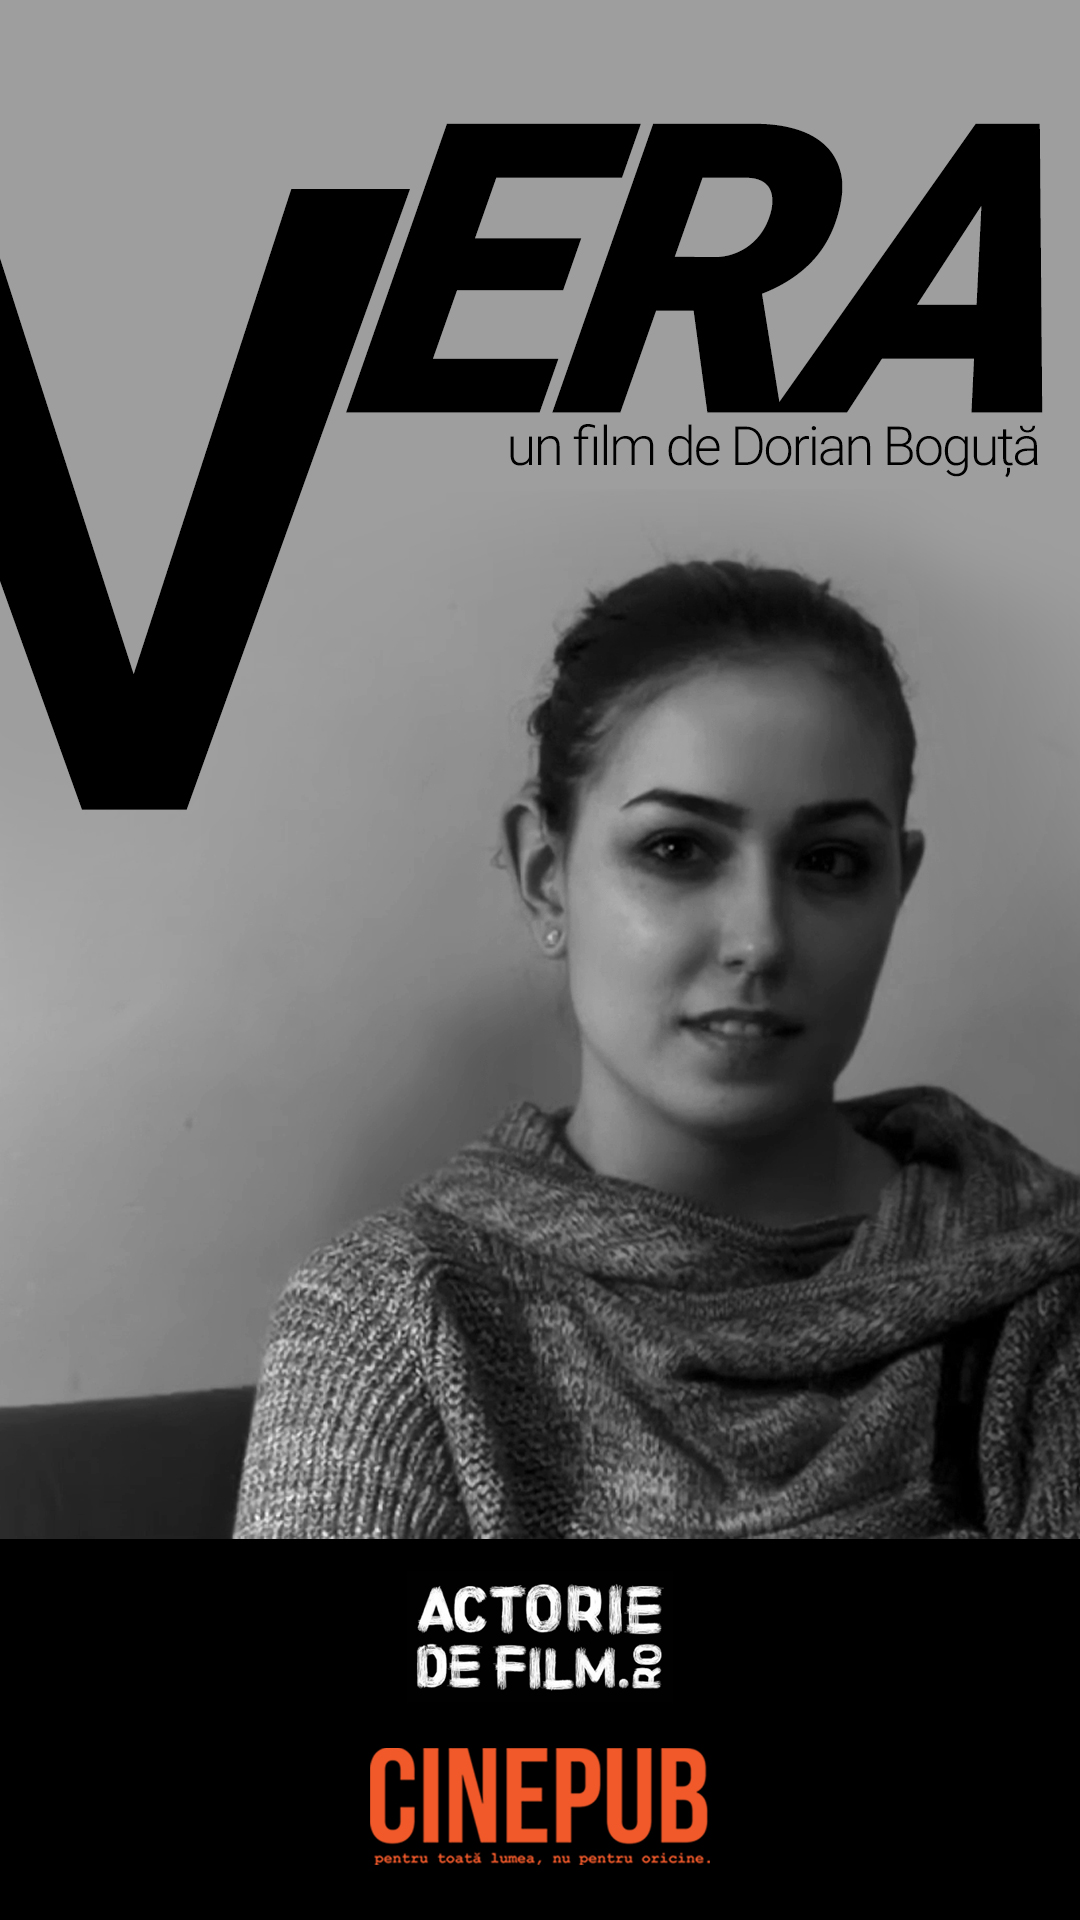 VERA - scurtmetraj regizat de Dorian Boguta, online pe CINEPUB